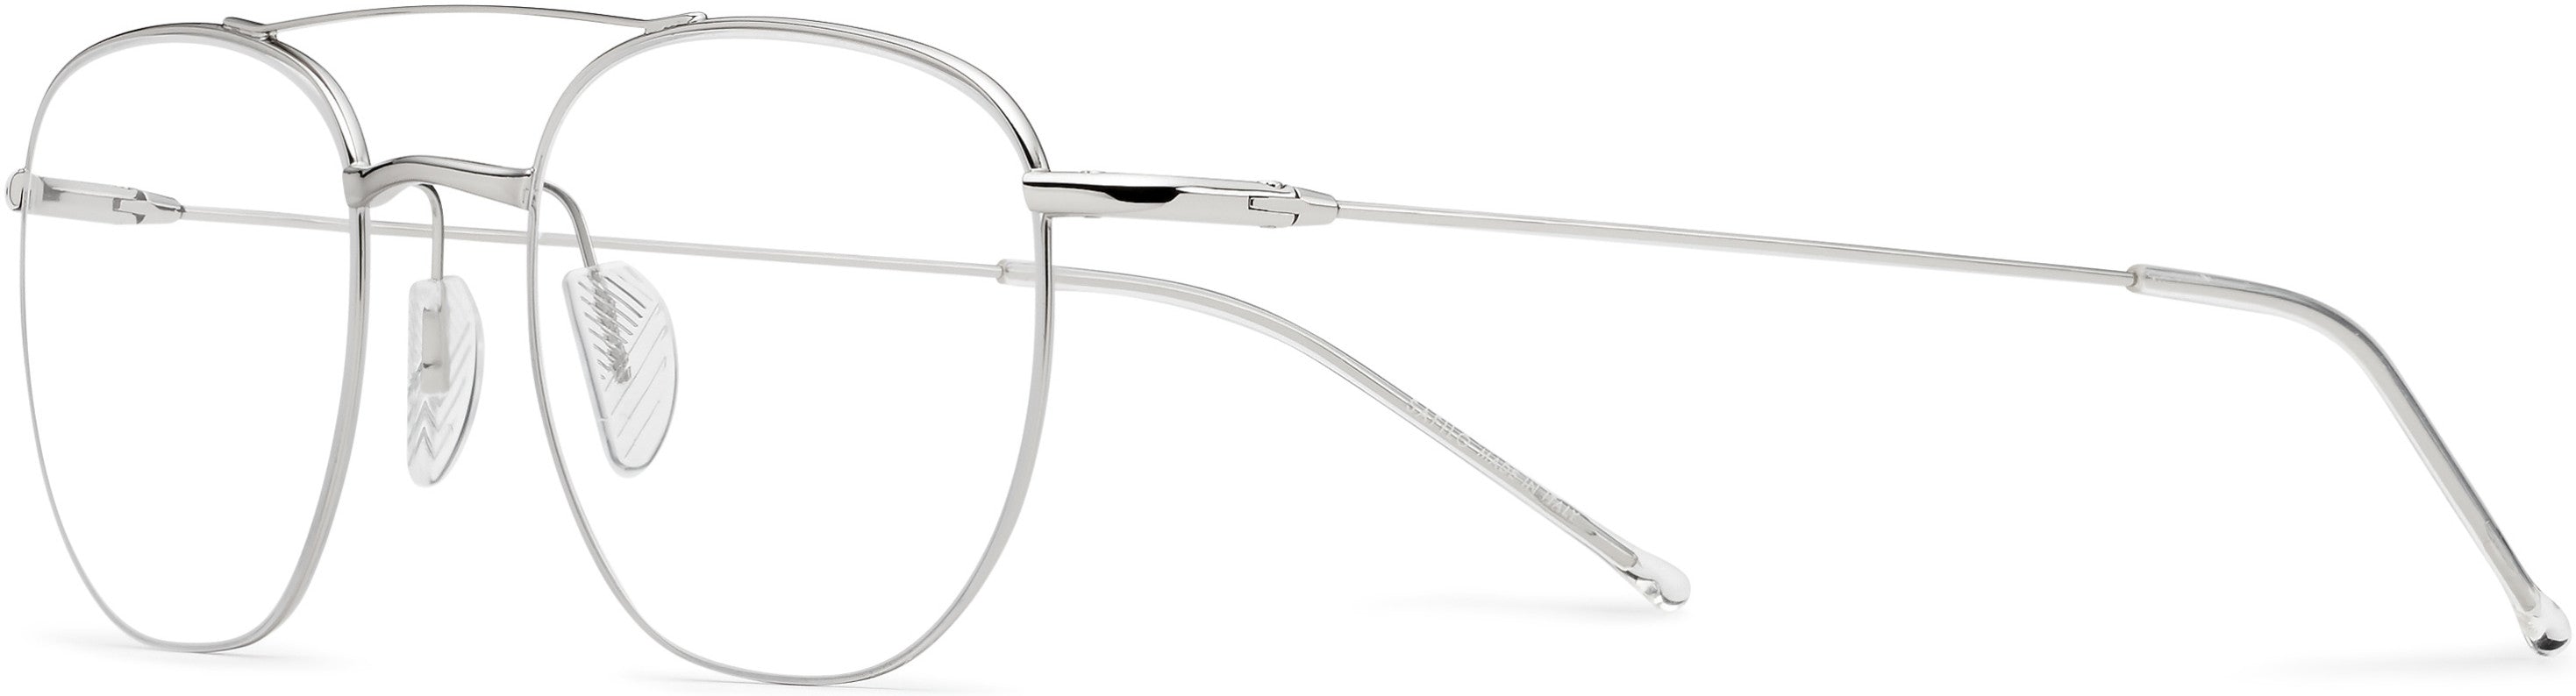 Safilo 2.0 Linea 02 Oval Modified Eyeglasses 0010-0010  Palladium (00 Demo Lens)